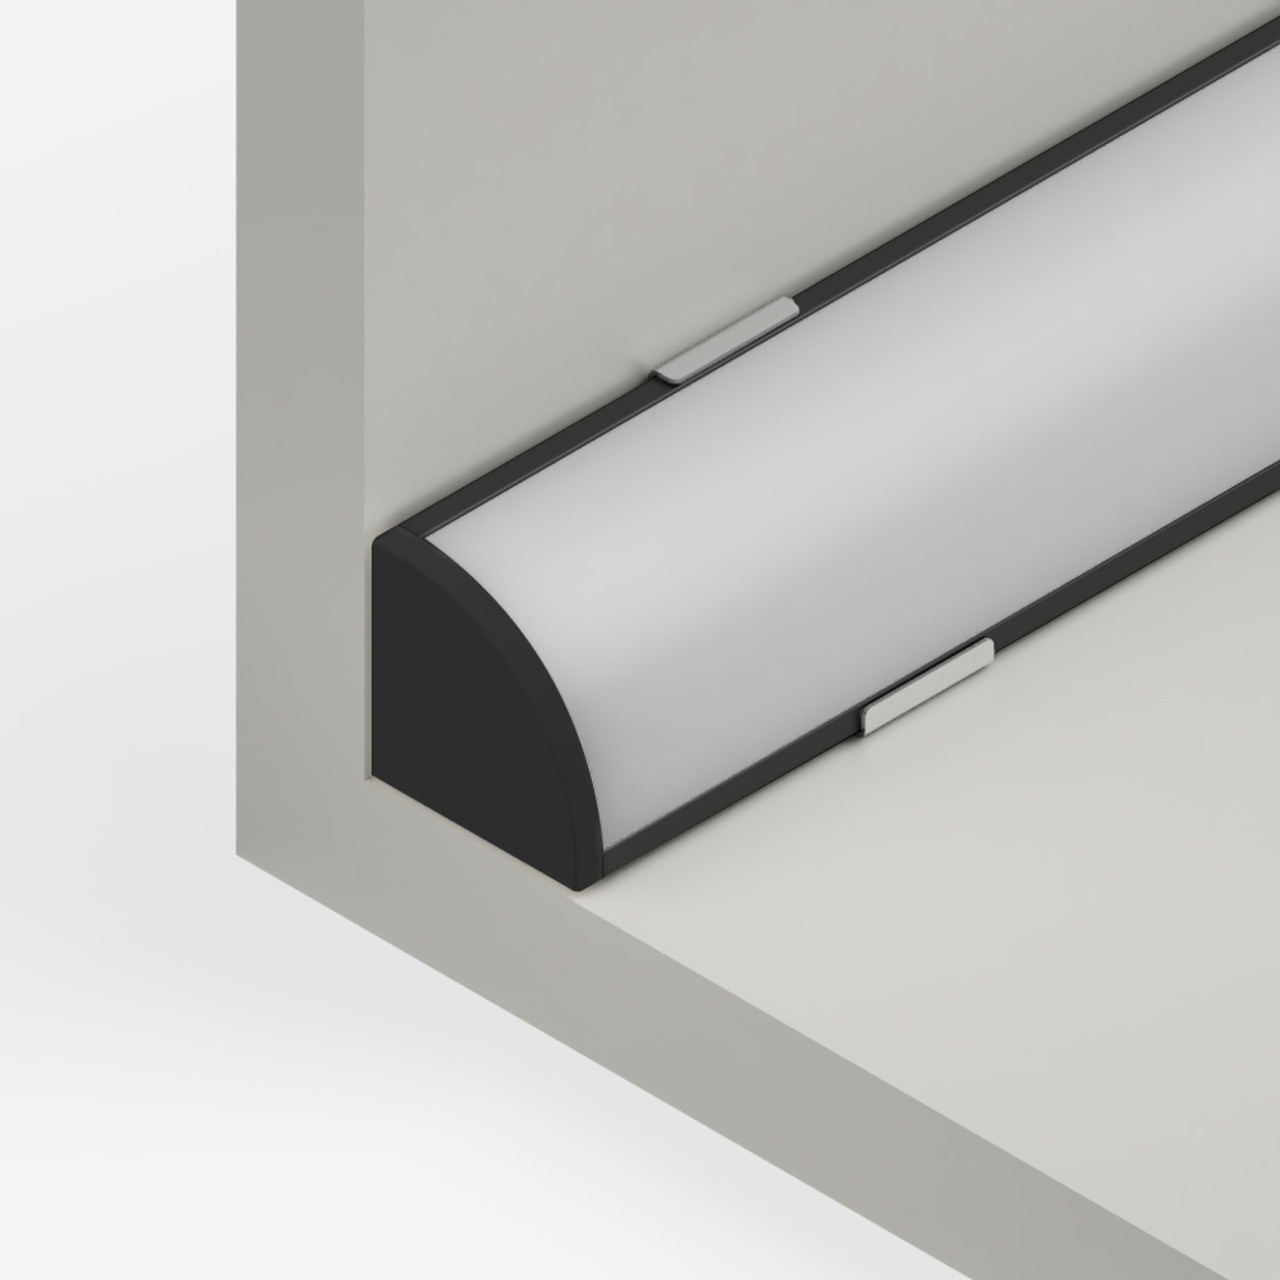 3m 16x16mm Corner Aluminium Profile Kit for up to 10mm Led strips